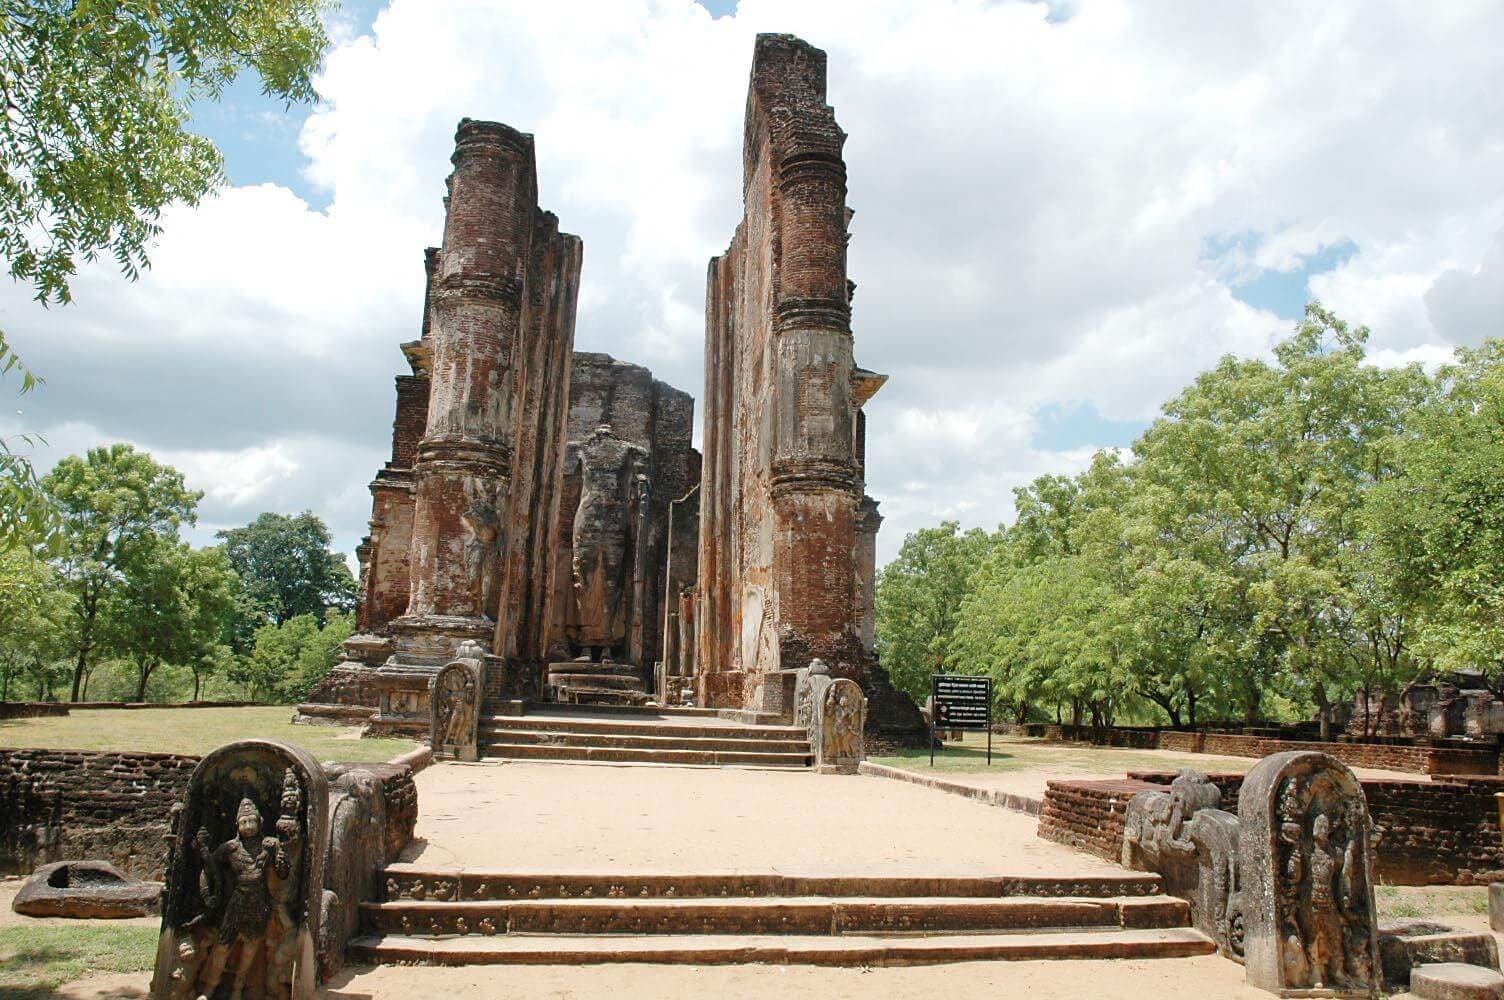 A photo of Thiwanka Image House 'Thiwanka Pilima Geya' in Polonnaruwa ancient kingdom Sri Lanka